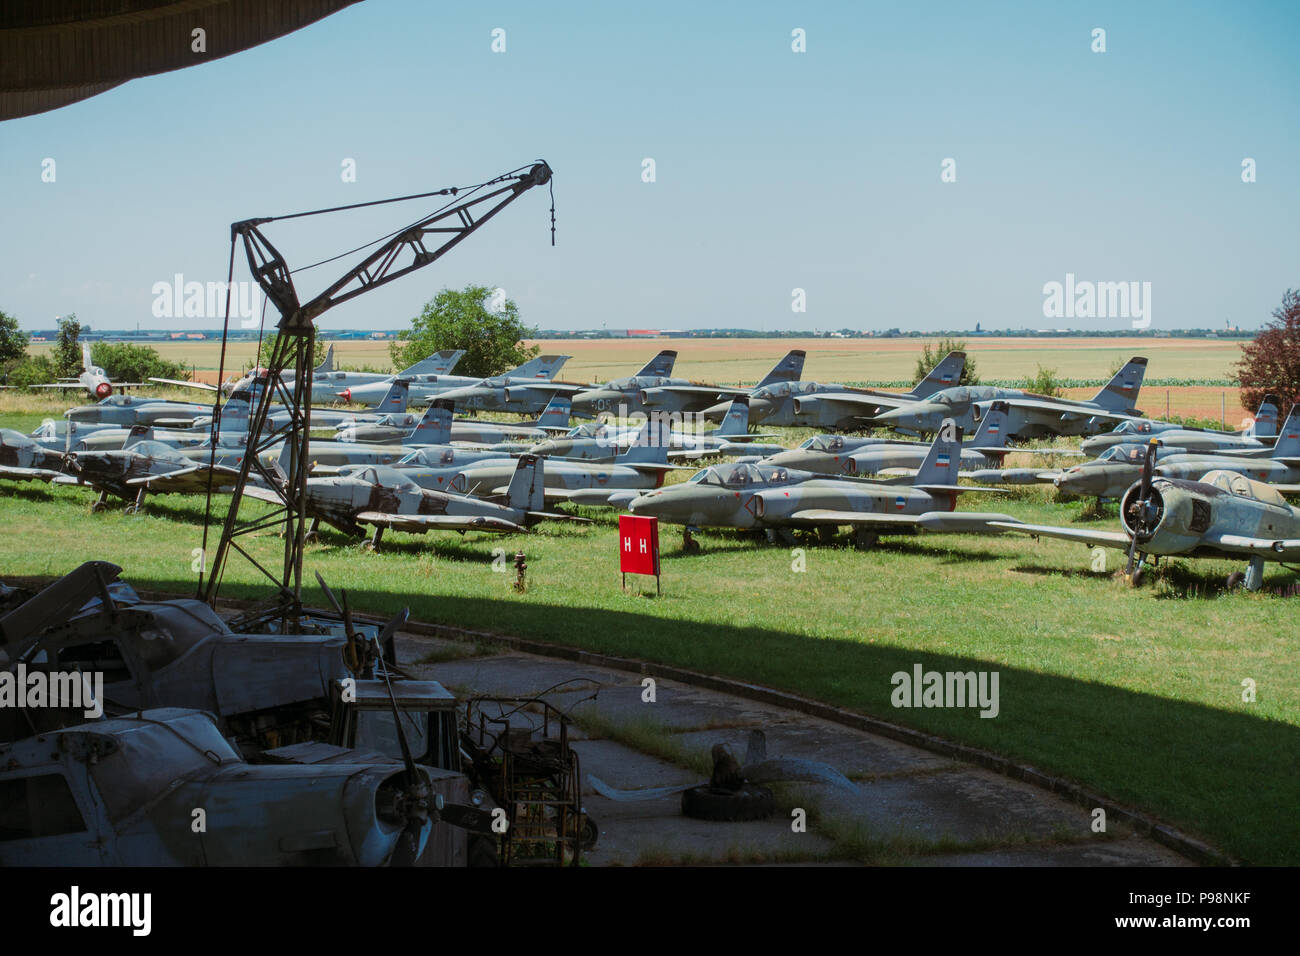 Neglected Yugoslav-era aircraft on display in the summer sun outside the Aeronautical Museum Belgrade, Serbia Stock Photo